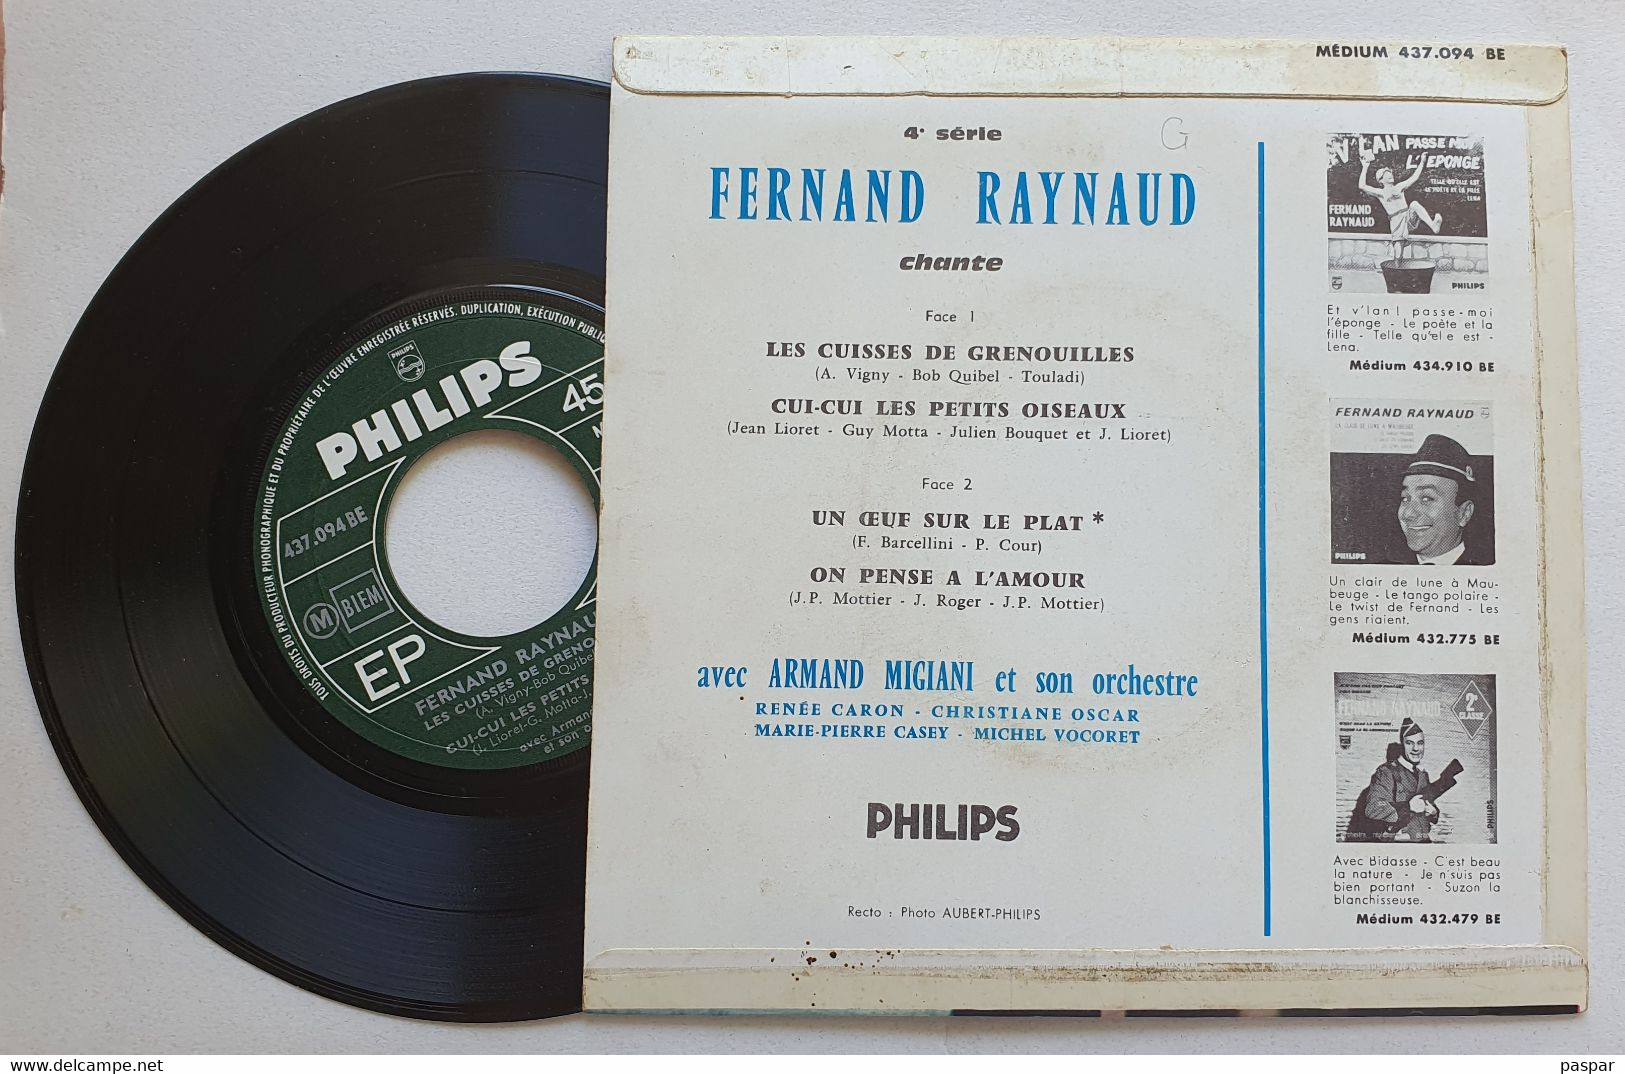 Fernand Raynaud - Comiche